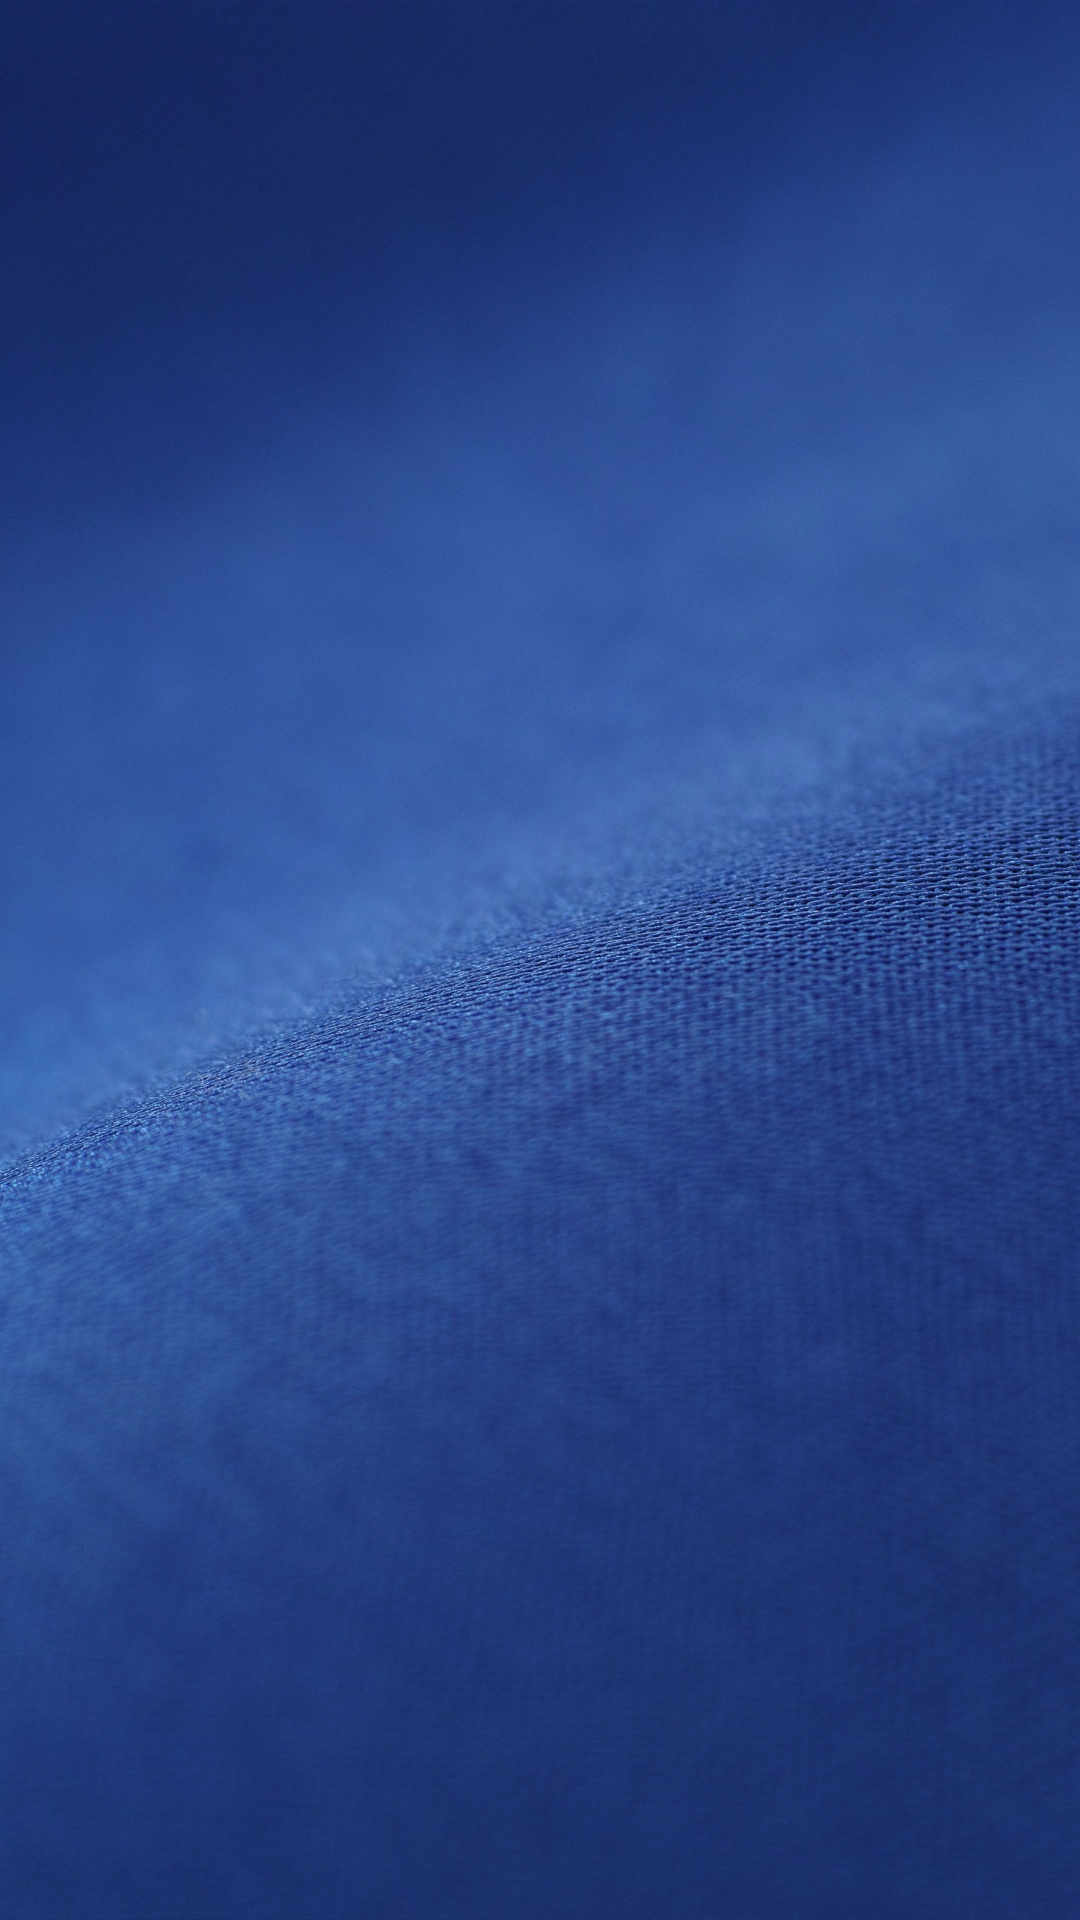 Textil Azul en Fotografía de Cerca. Wallpaper in 1080x1920 Resolution